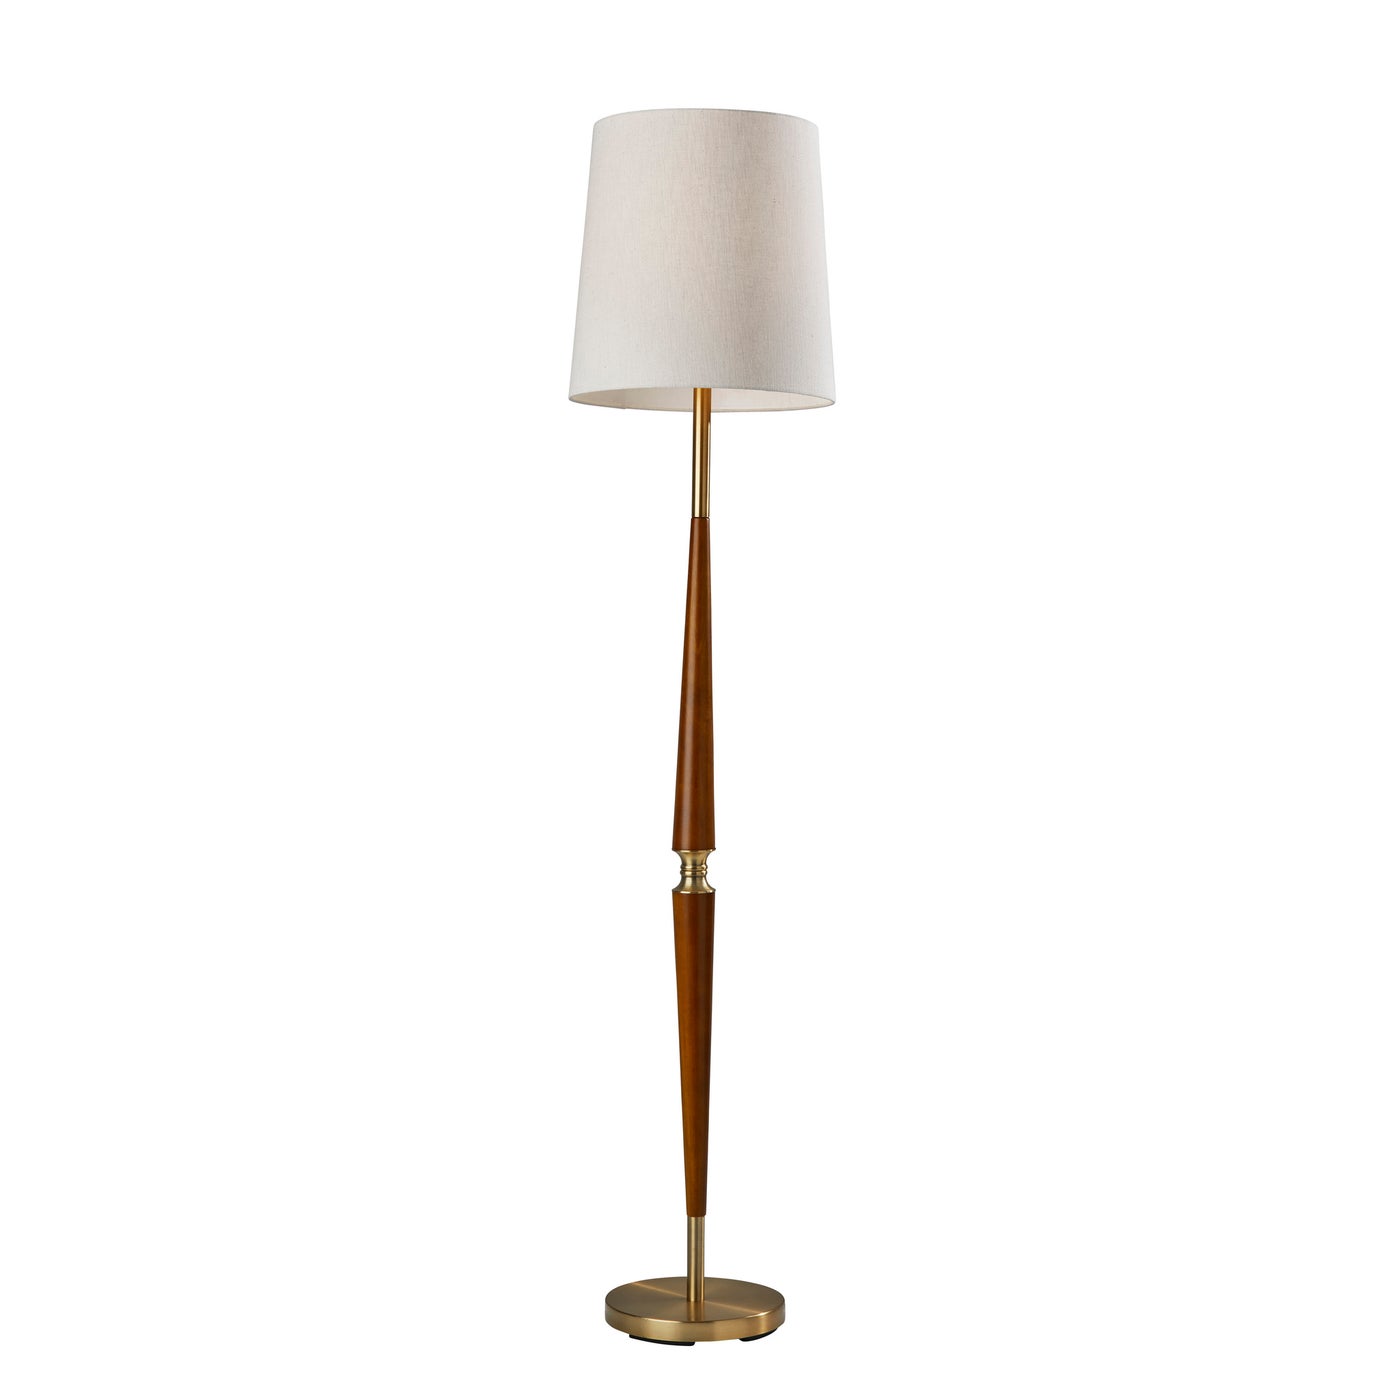 Adesso Home - 3154-15 - Floor Lamp - Weston - Walnut Rubberwood W. Antique Brass Accents